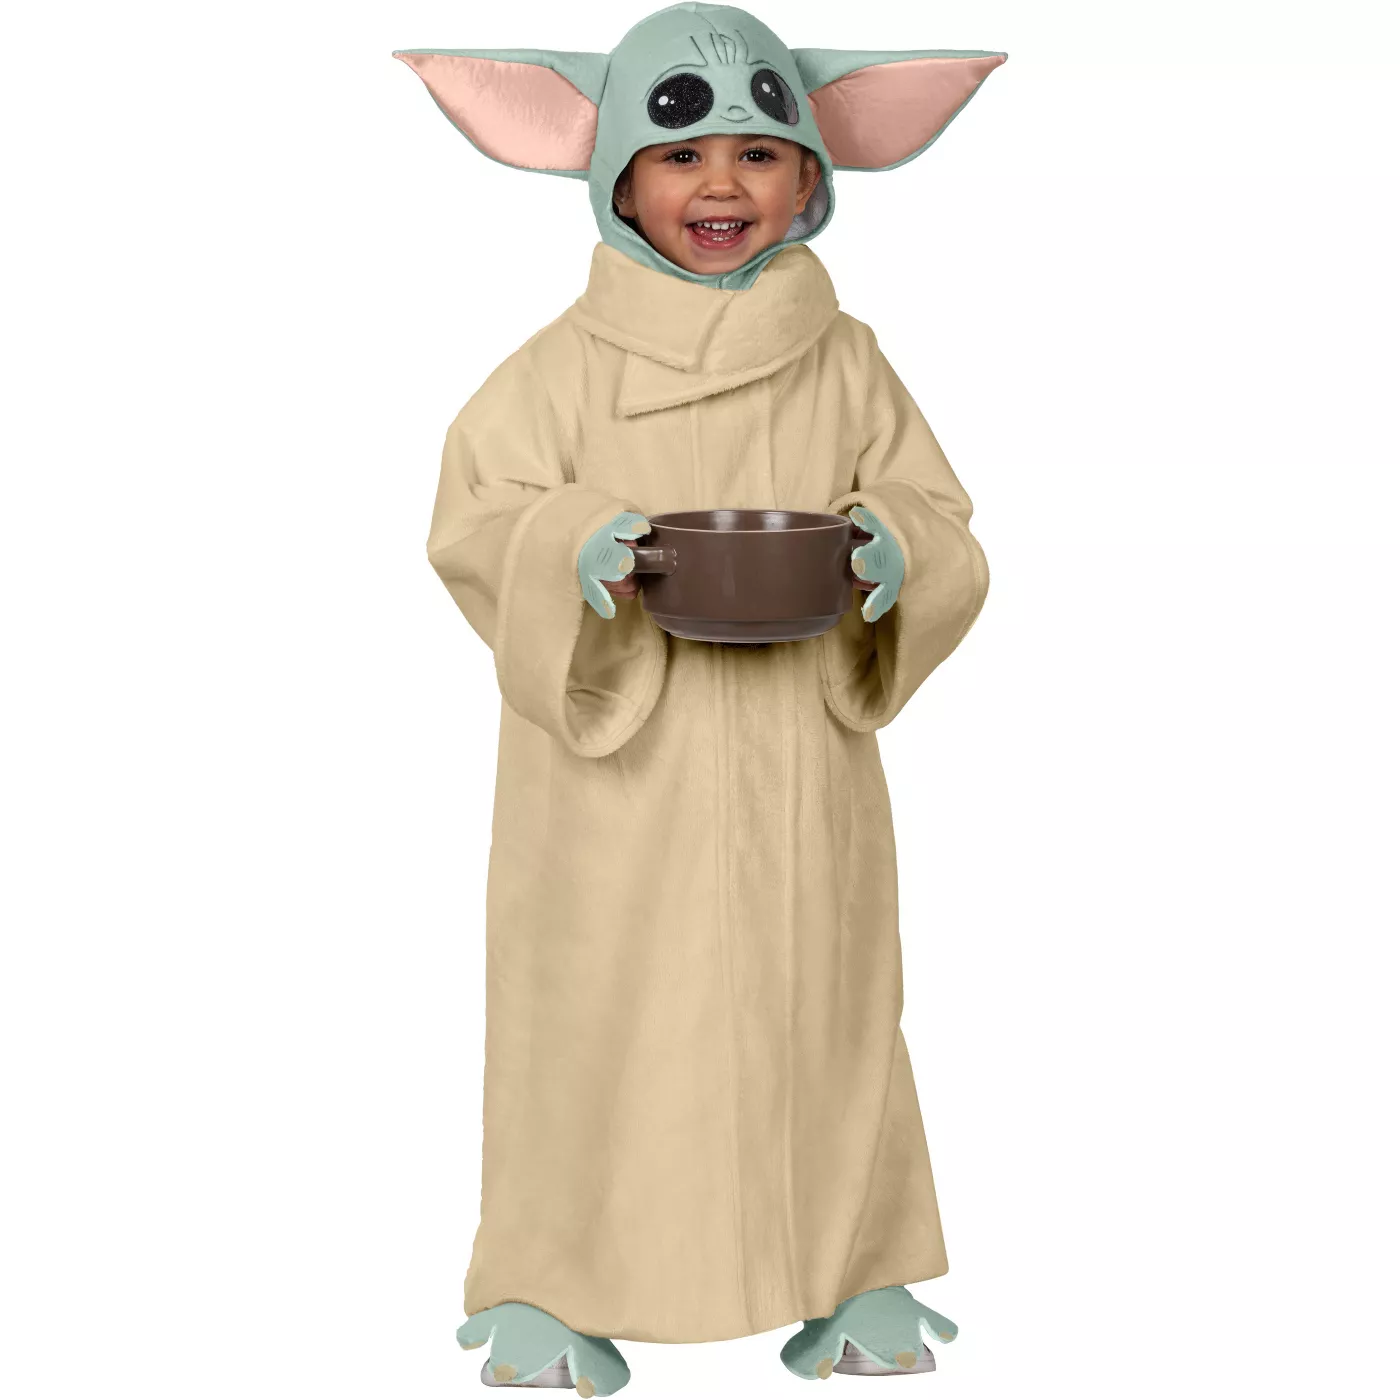 Toddler Star Wars Mandalorian The Child (Baby Yoda) Halloween Costume Jumper - image 1 of 2